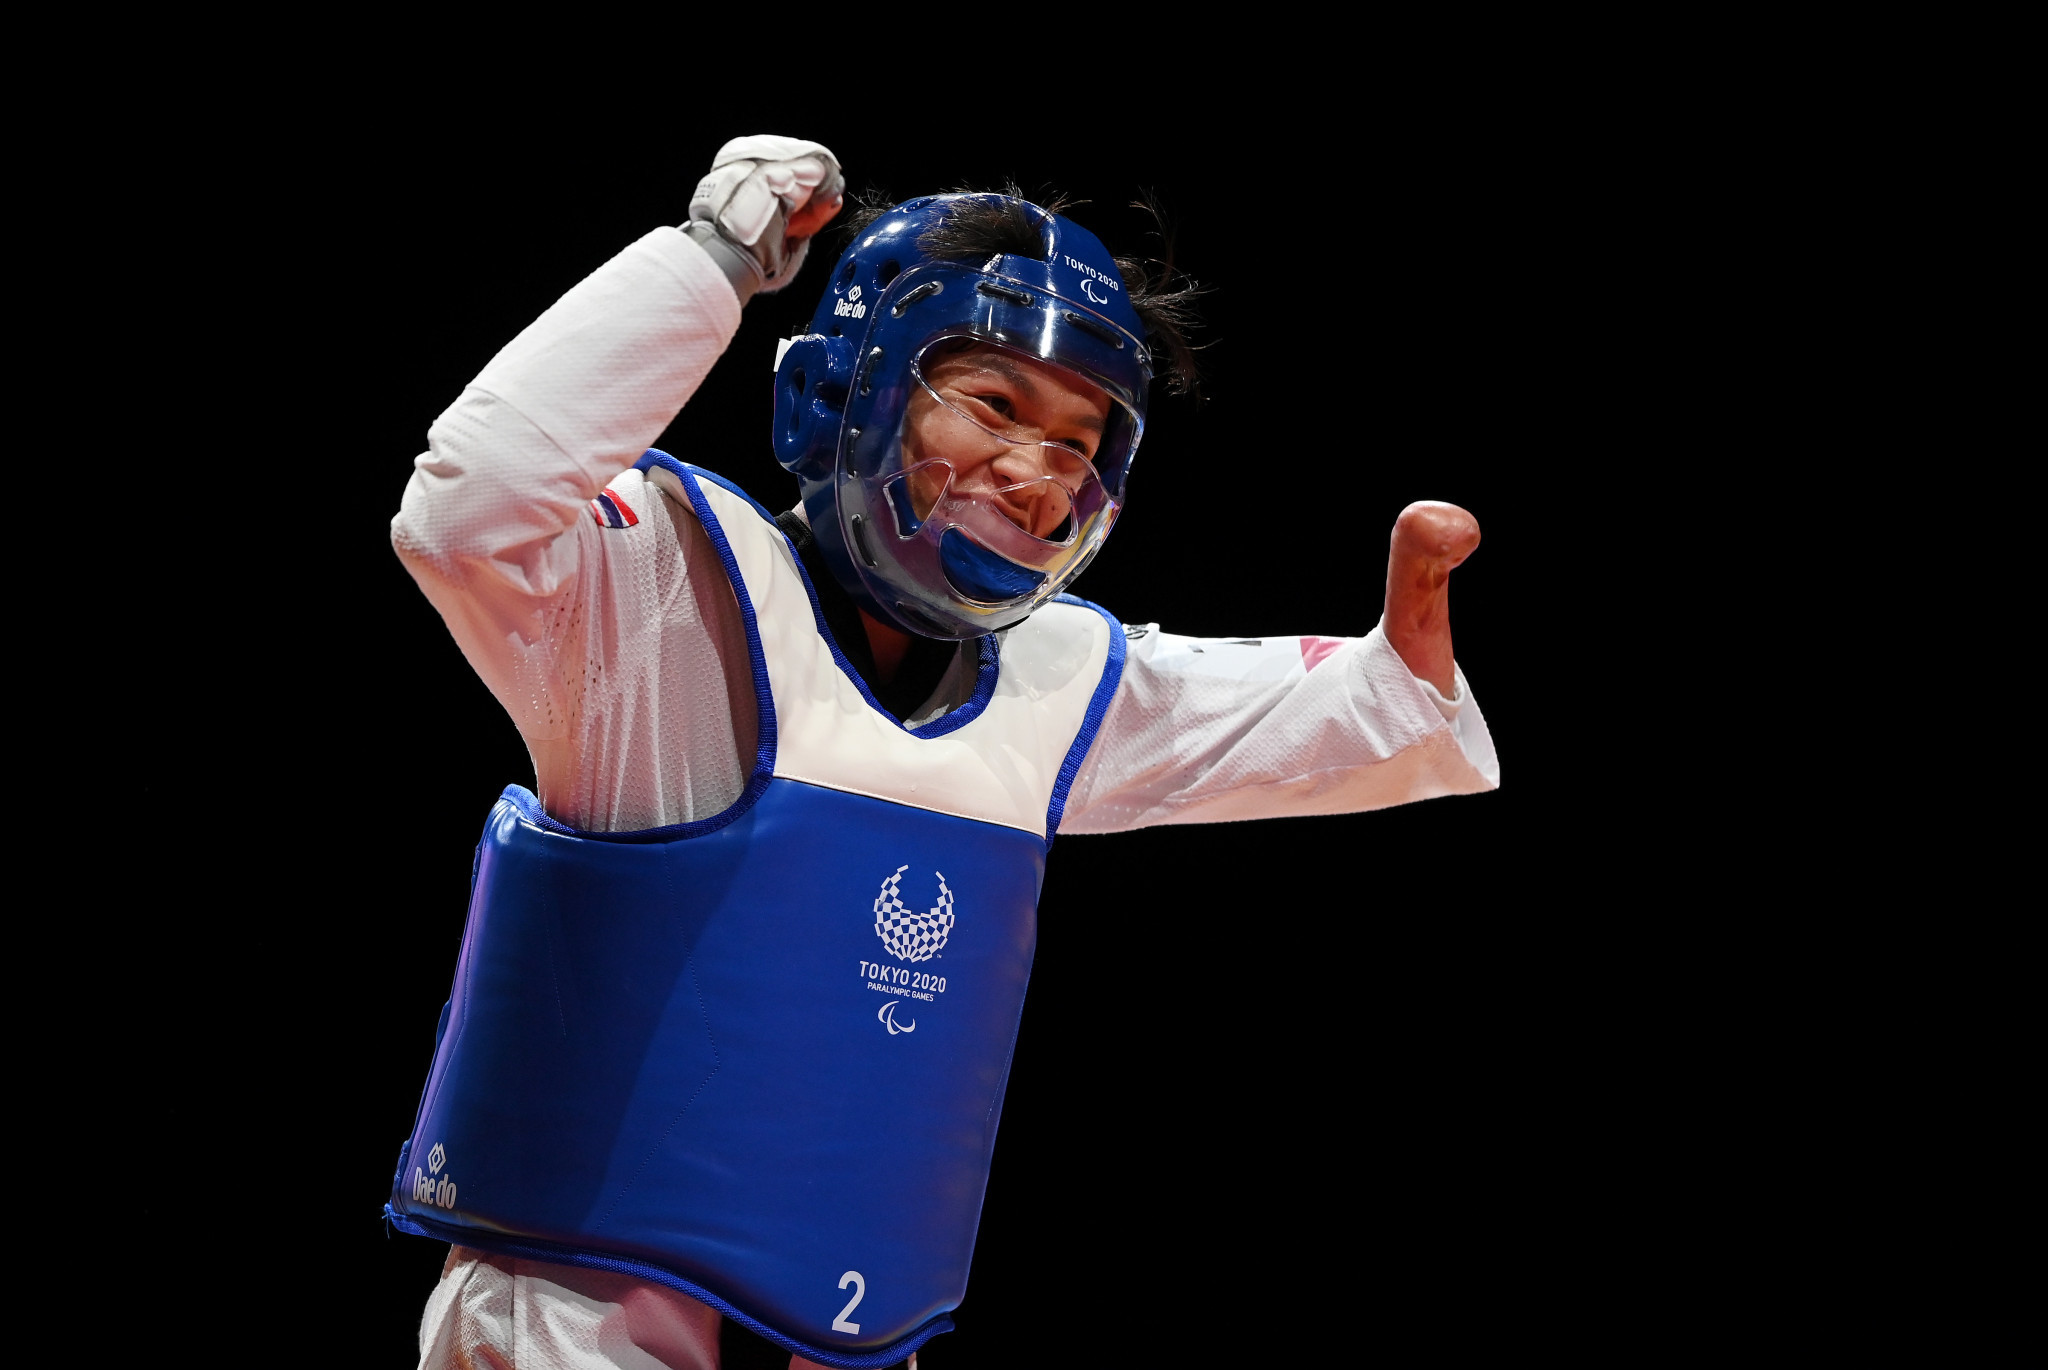 Taekwondo star Phuangkitcha named female Para athlete of the year in Thailand